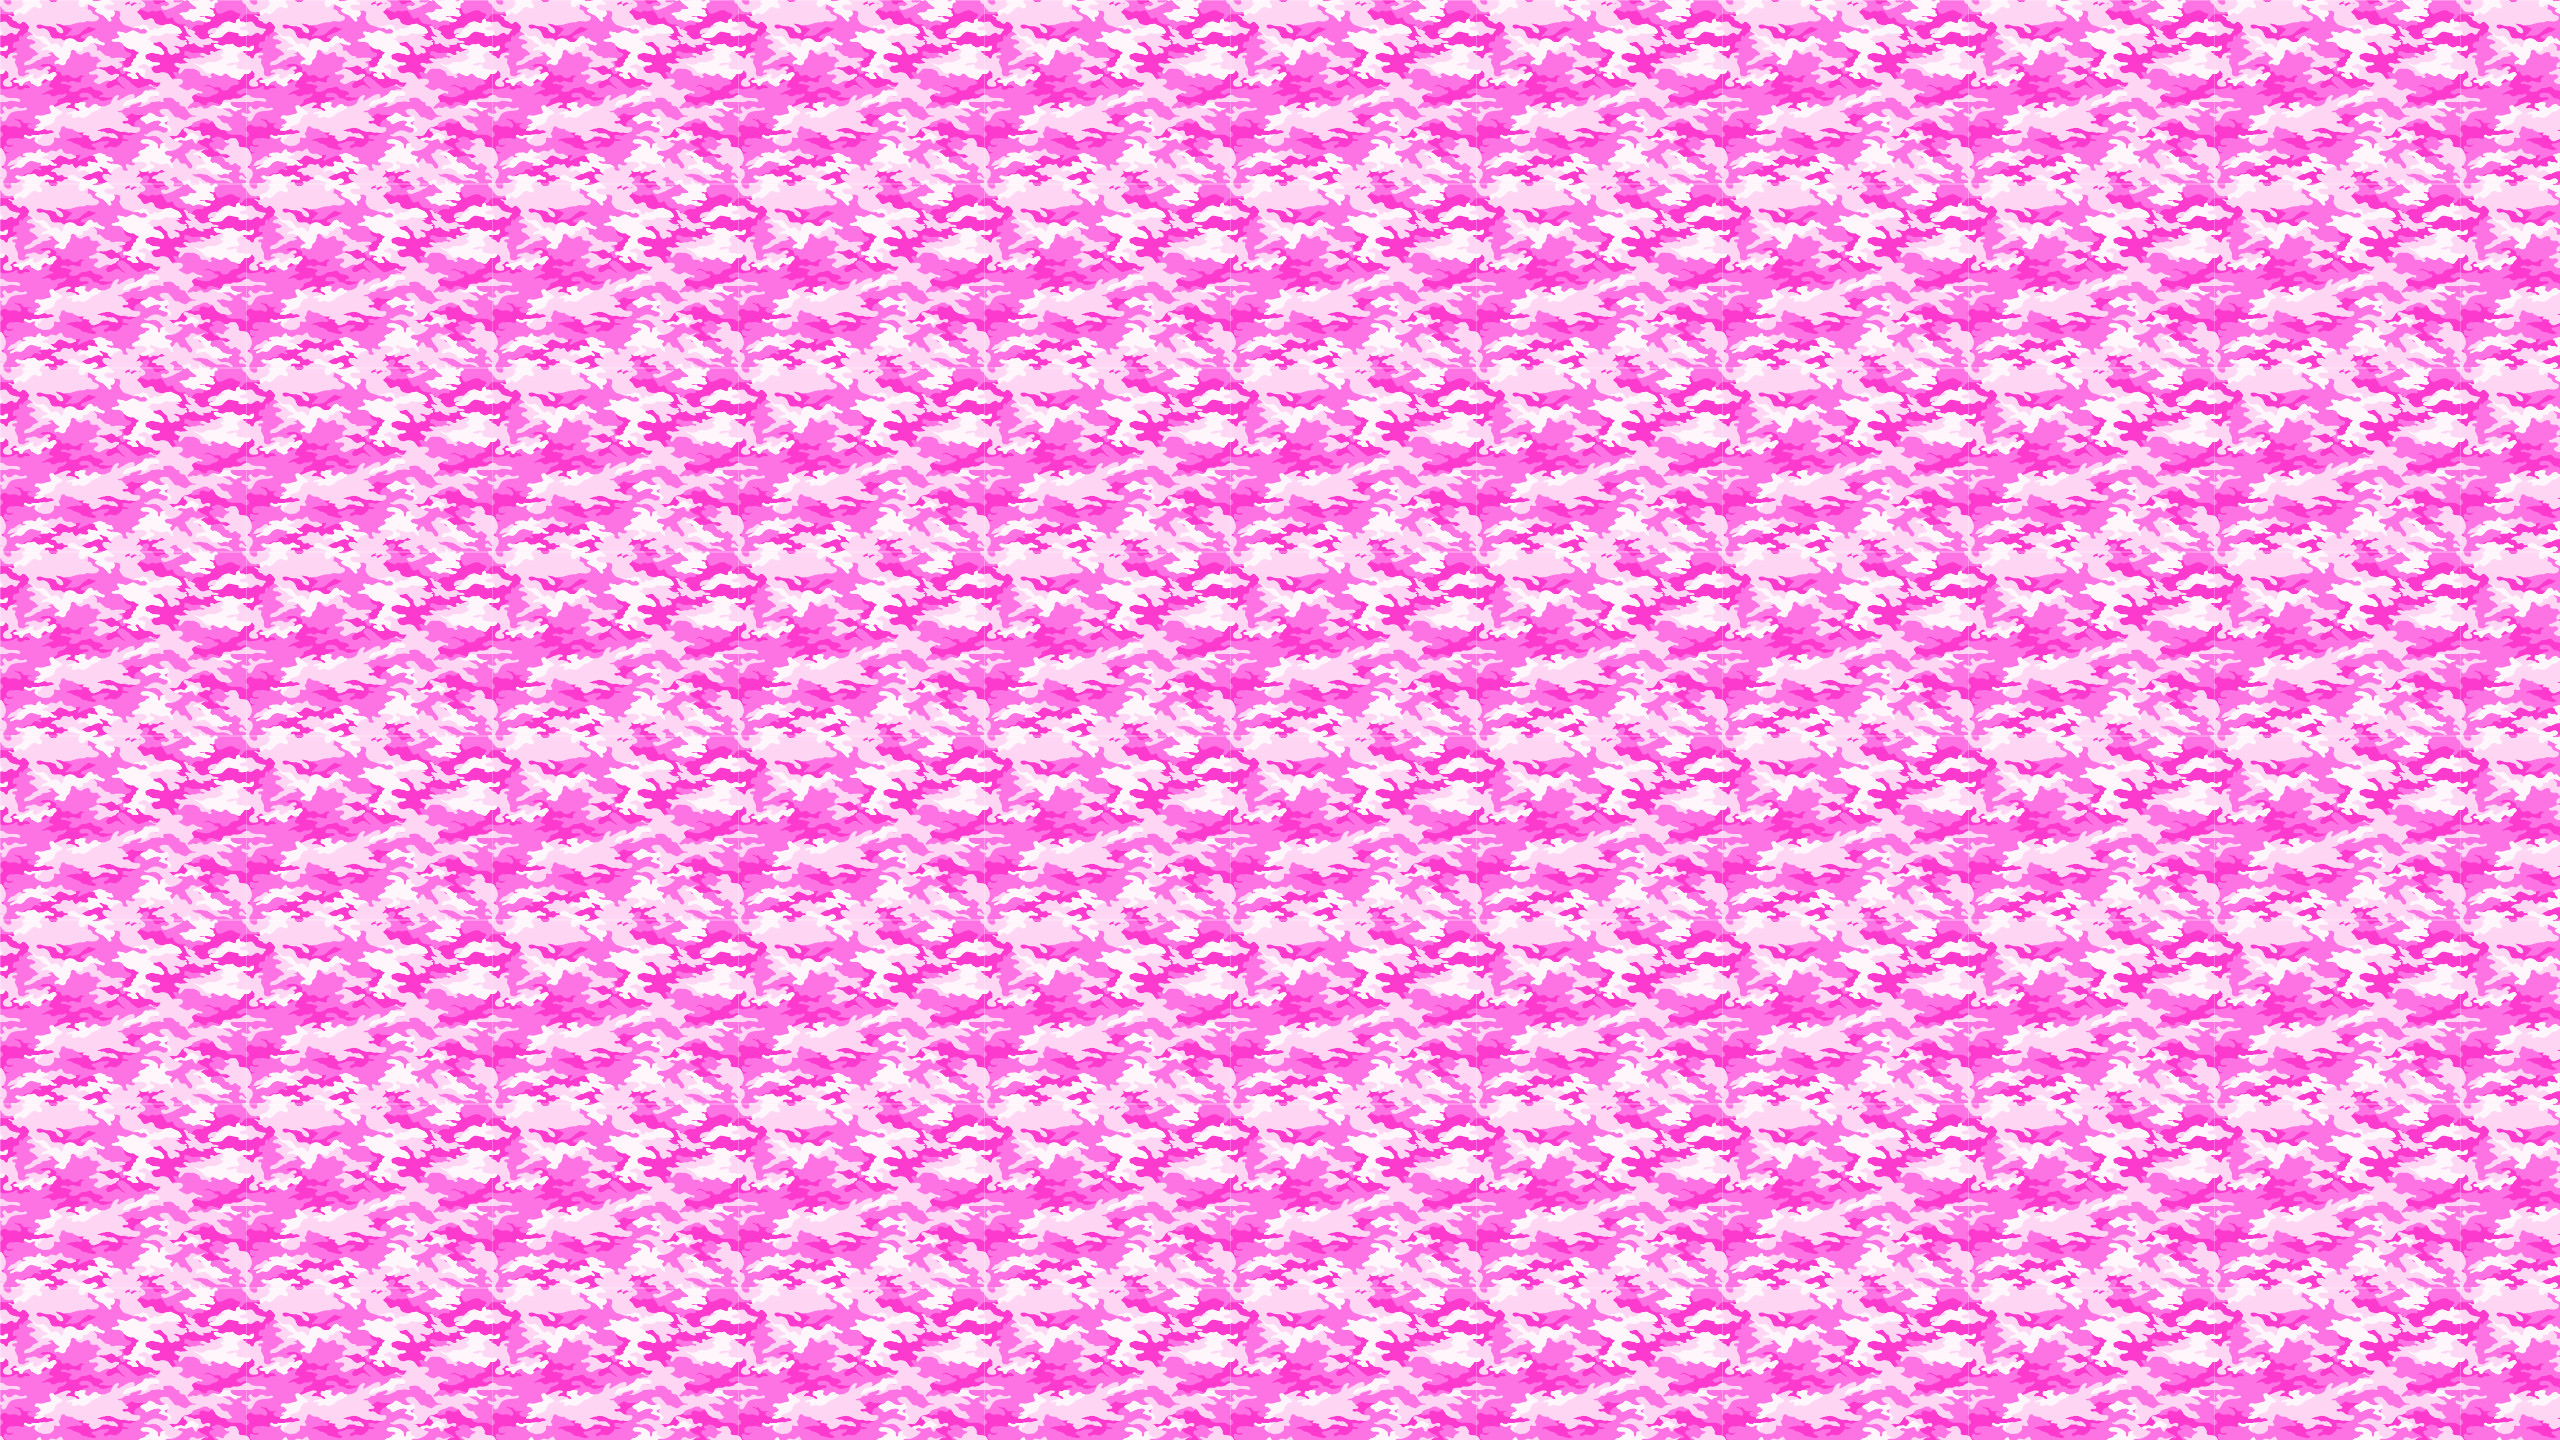 2560x1440 Wallpaper pink williams images sherwin.